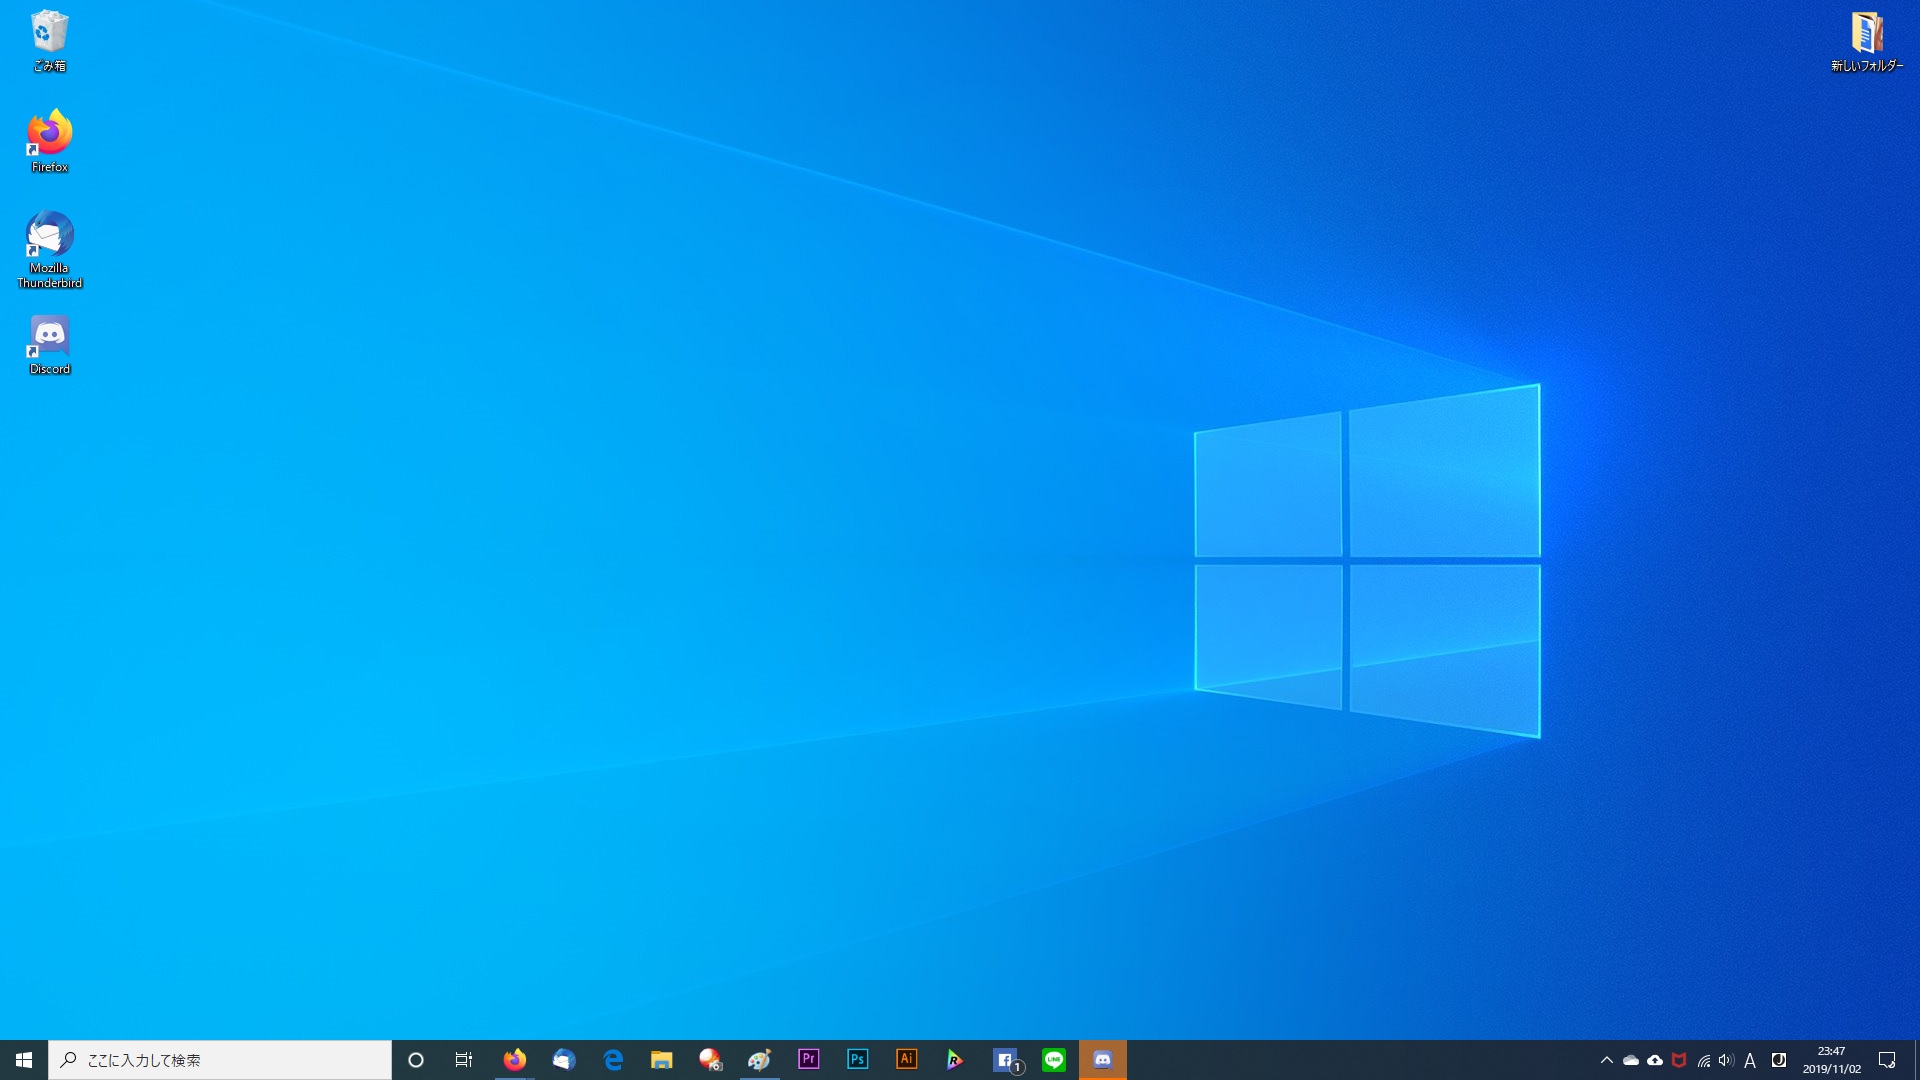 Windows10の表示がいつもと違う デスクトップが表示されない Well